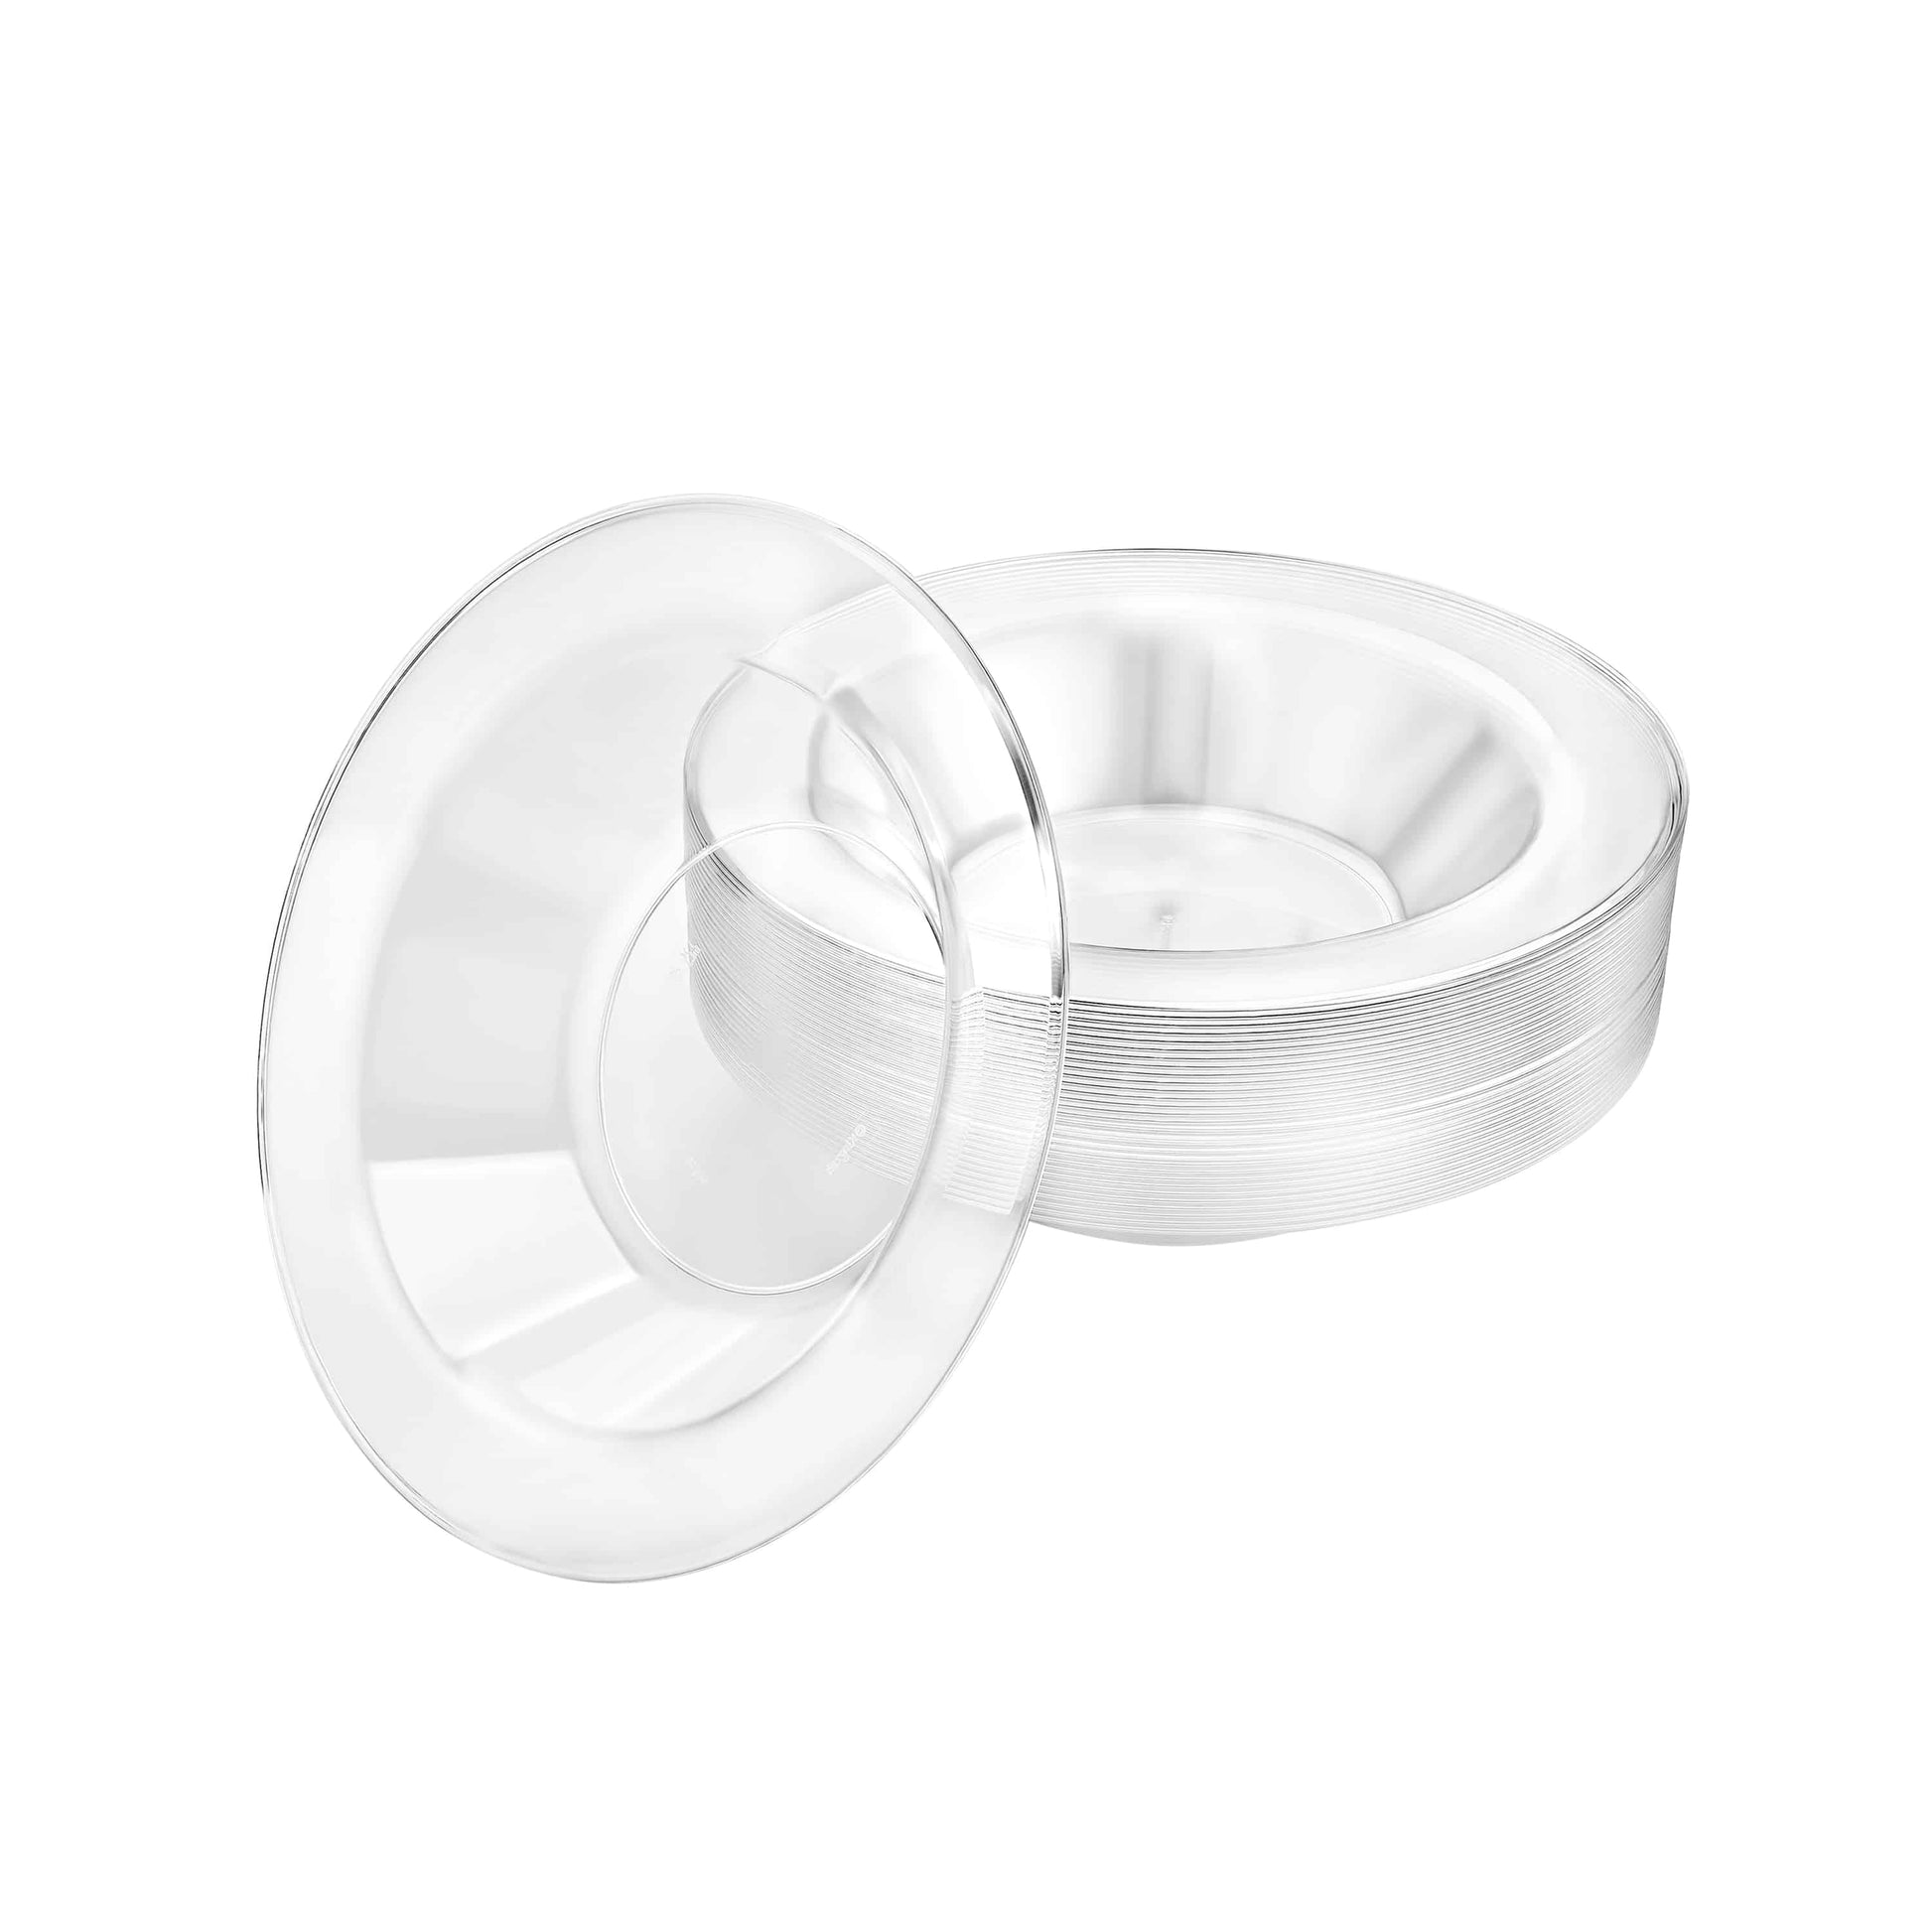 Magnificence Premium Plastic Round Dinnerware - clear bowl